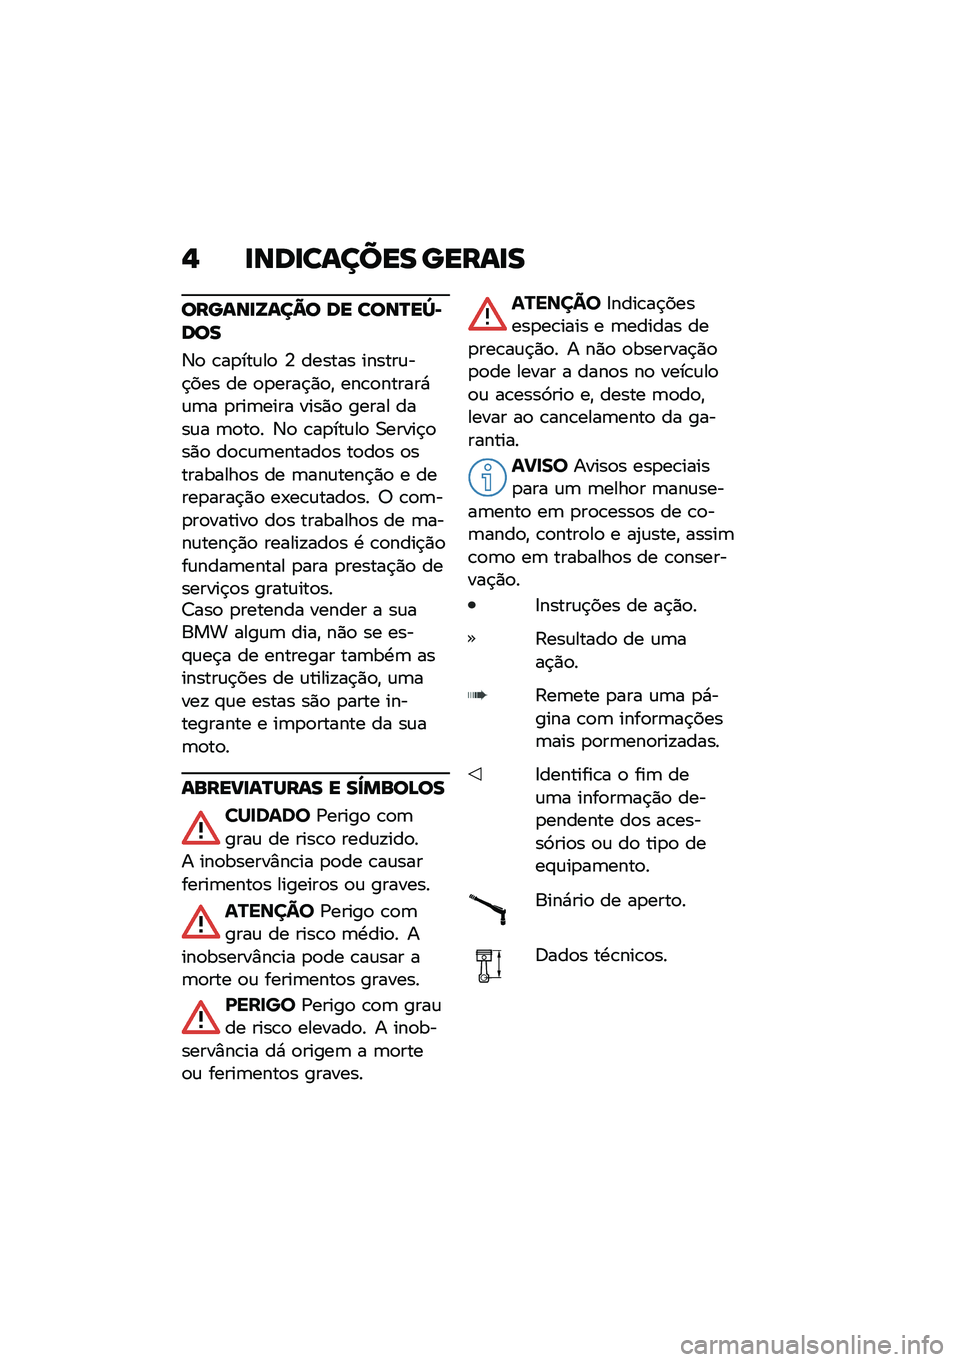 BMW MOTORRAD R NINE T SCRAMBLER 2020  Manual do condutor (in Portuguese) �, �
���
������ �����
�
������
�X���@� �� ����P��a�*���
�3�
 �\b��
���\f��
 �4 ������ ������\f��$��� �� �
�
����$�)�
�" ���\b�
������*�\f�	